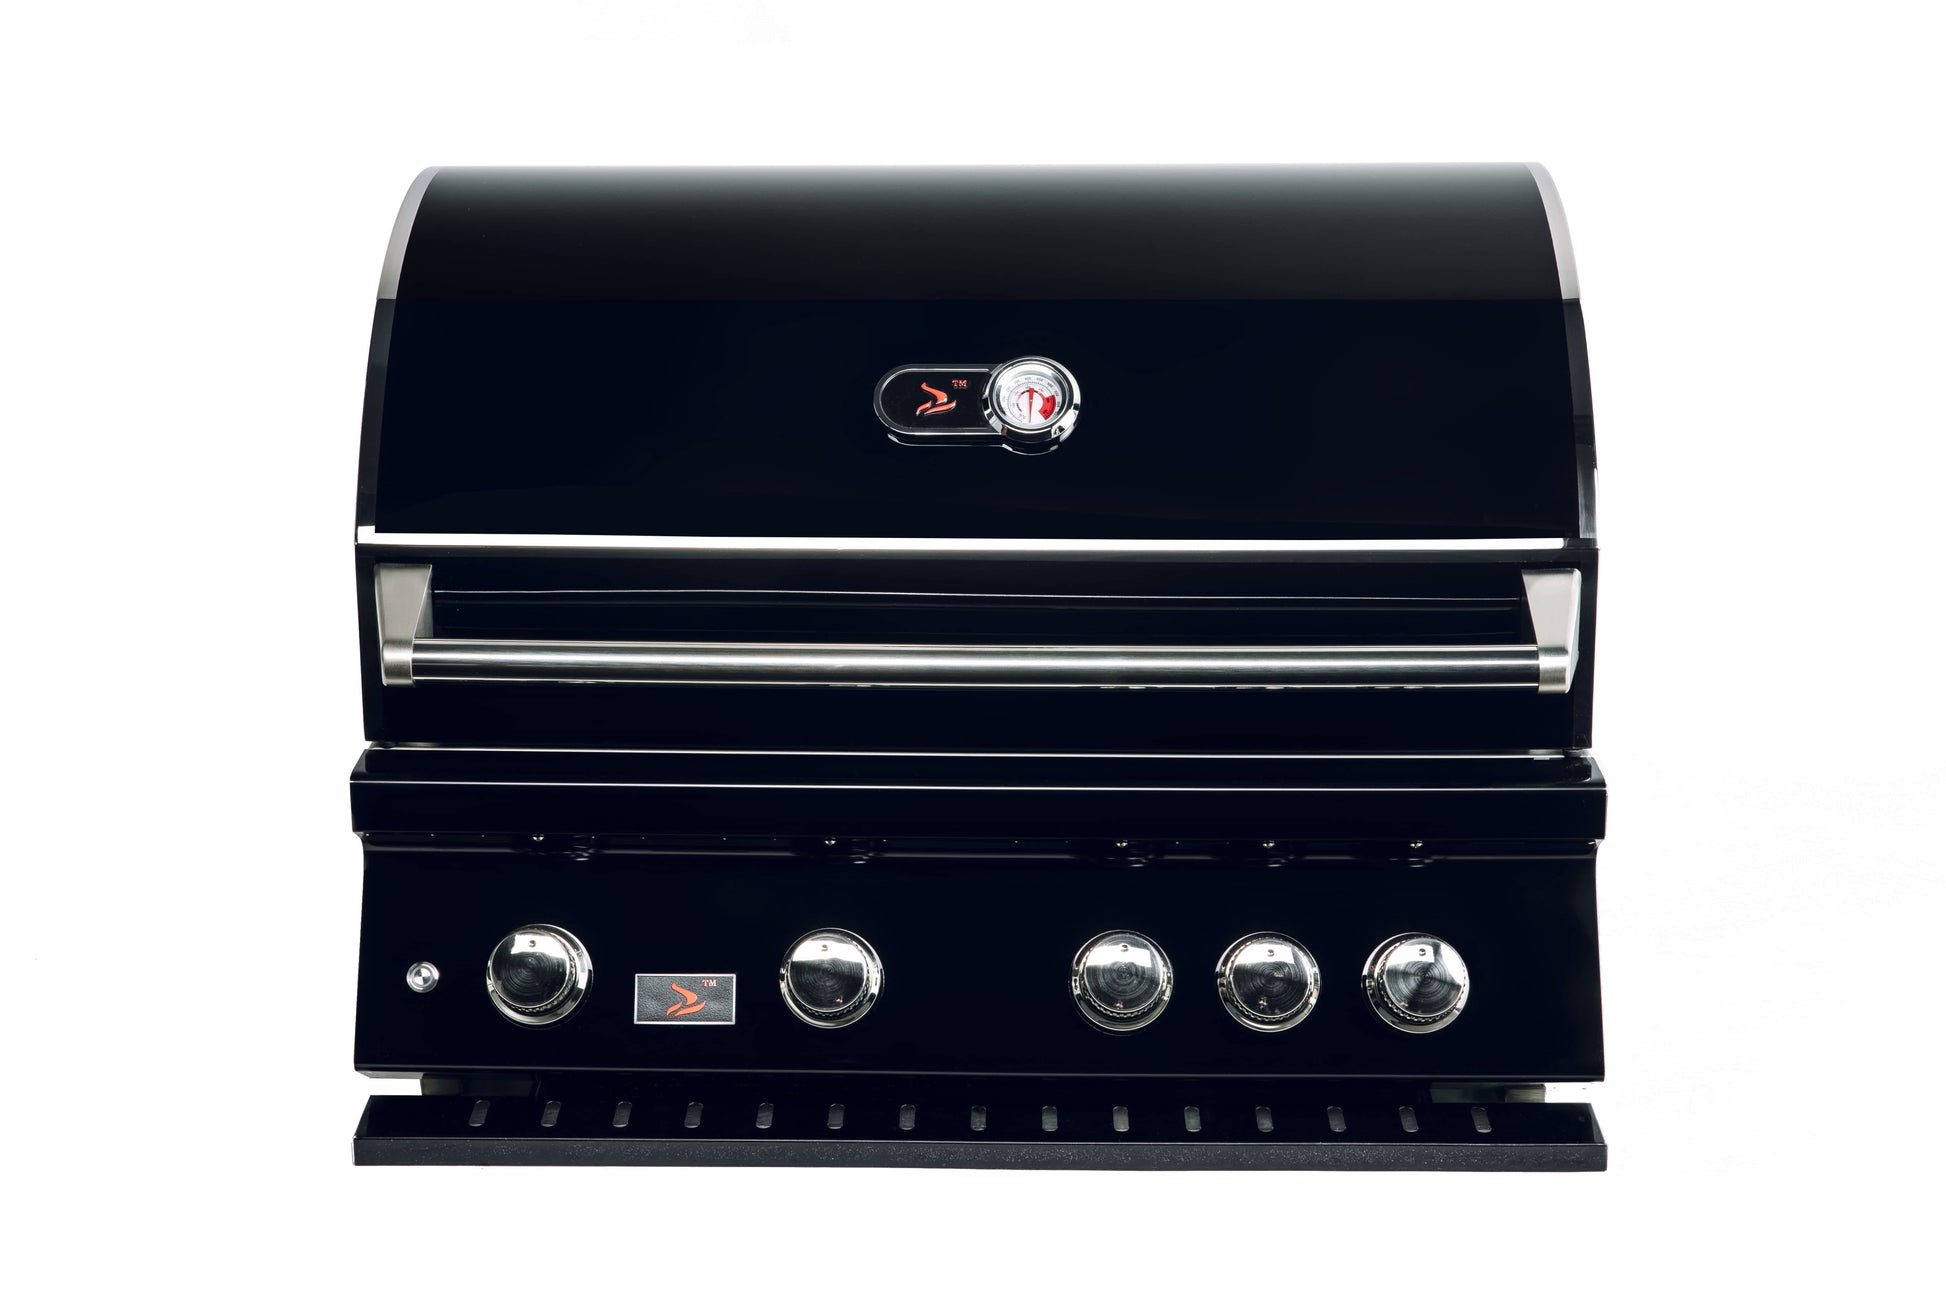 Bonfire-Black-Stainless-Steel-34-and-4-Burner-grill-built-in-with-rotisserie-kit-Black-SeriesCBB4-B